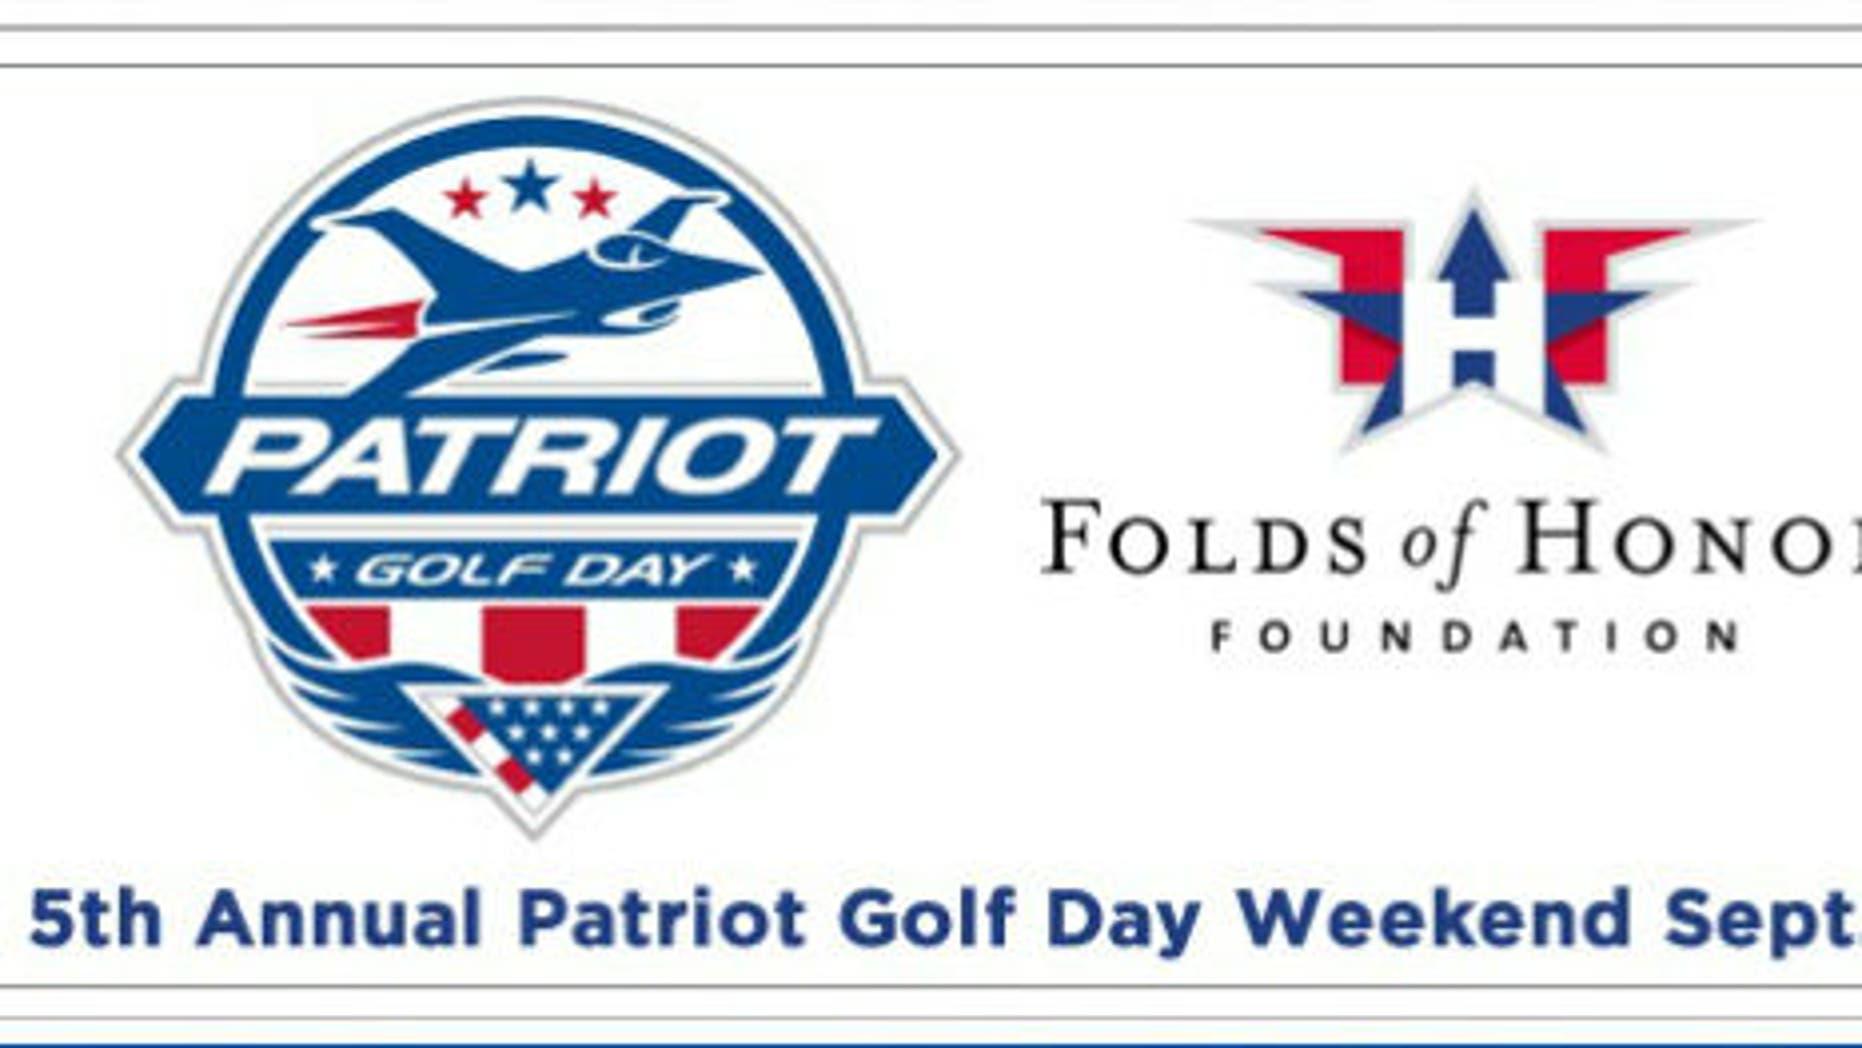 Folds of Honor Patriot Golf Day Fox News